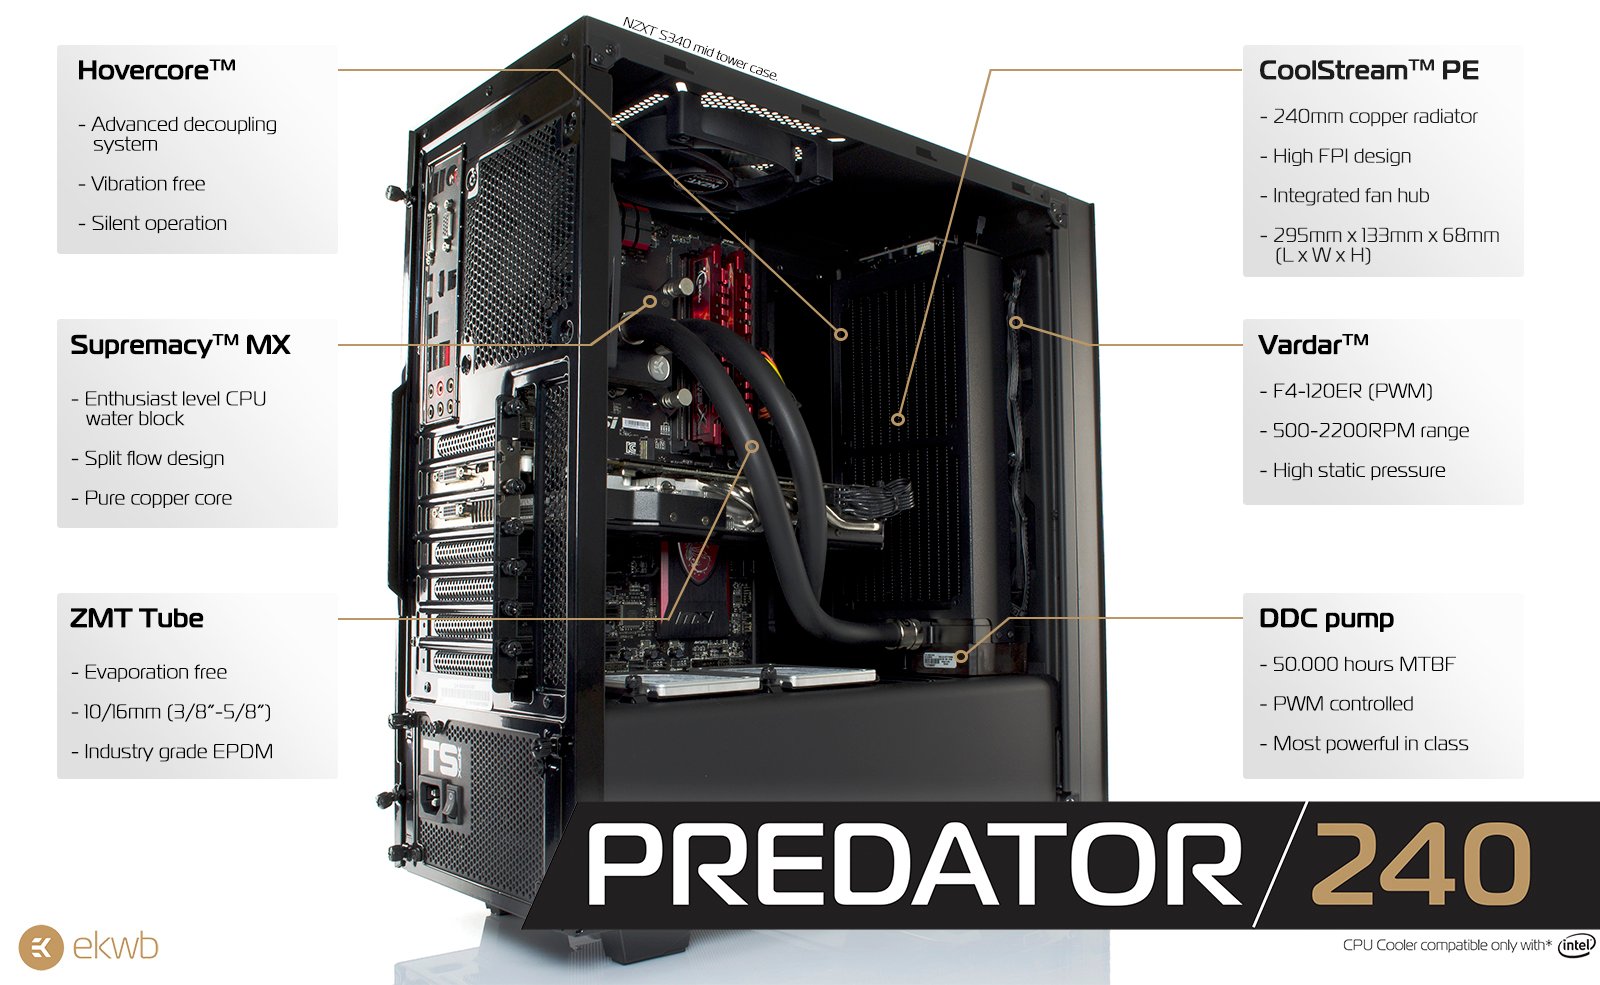 Predator 240 features